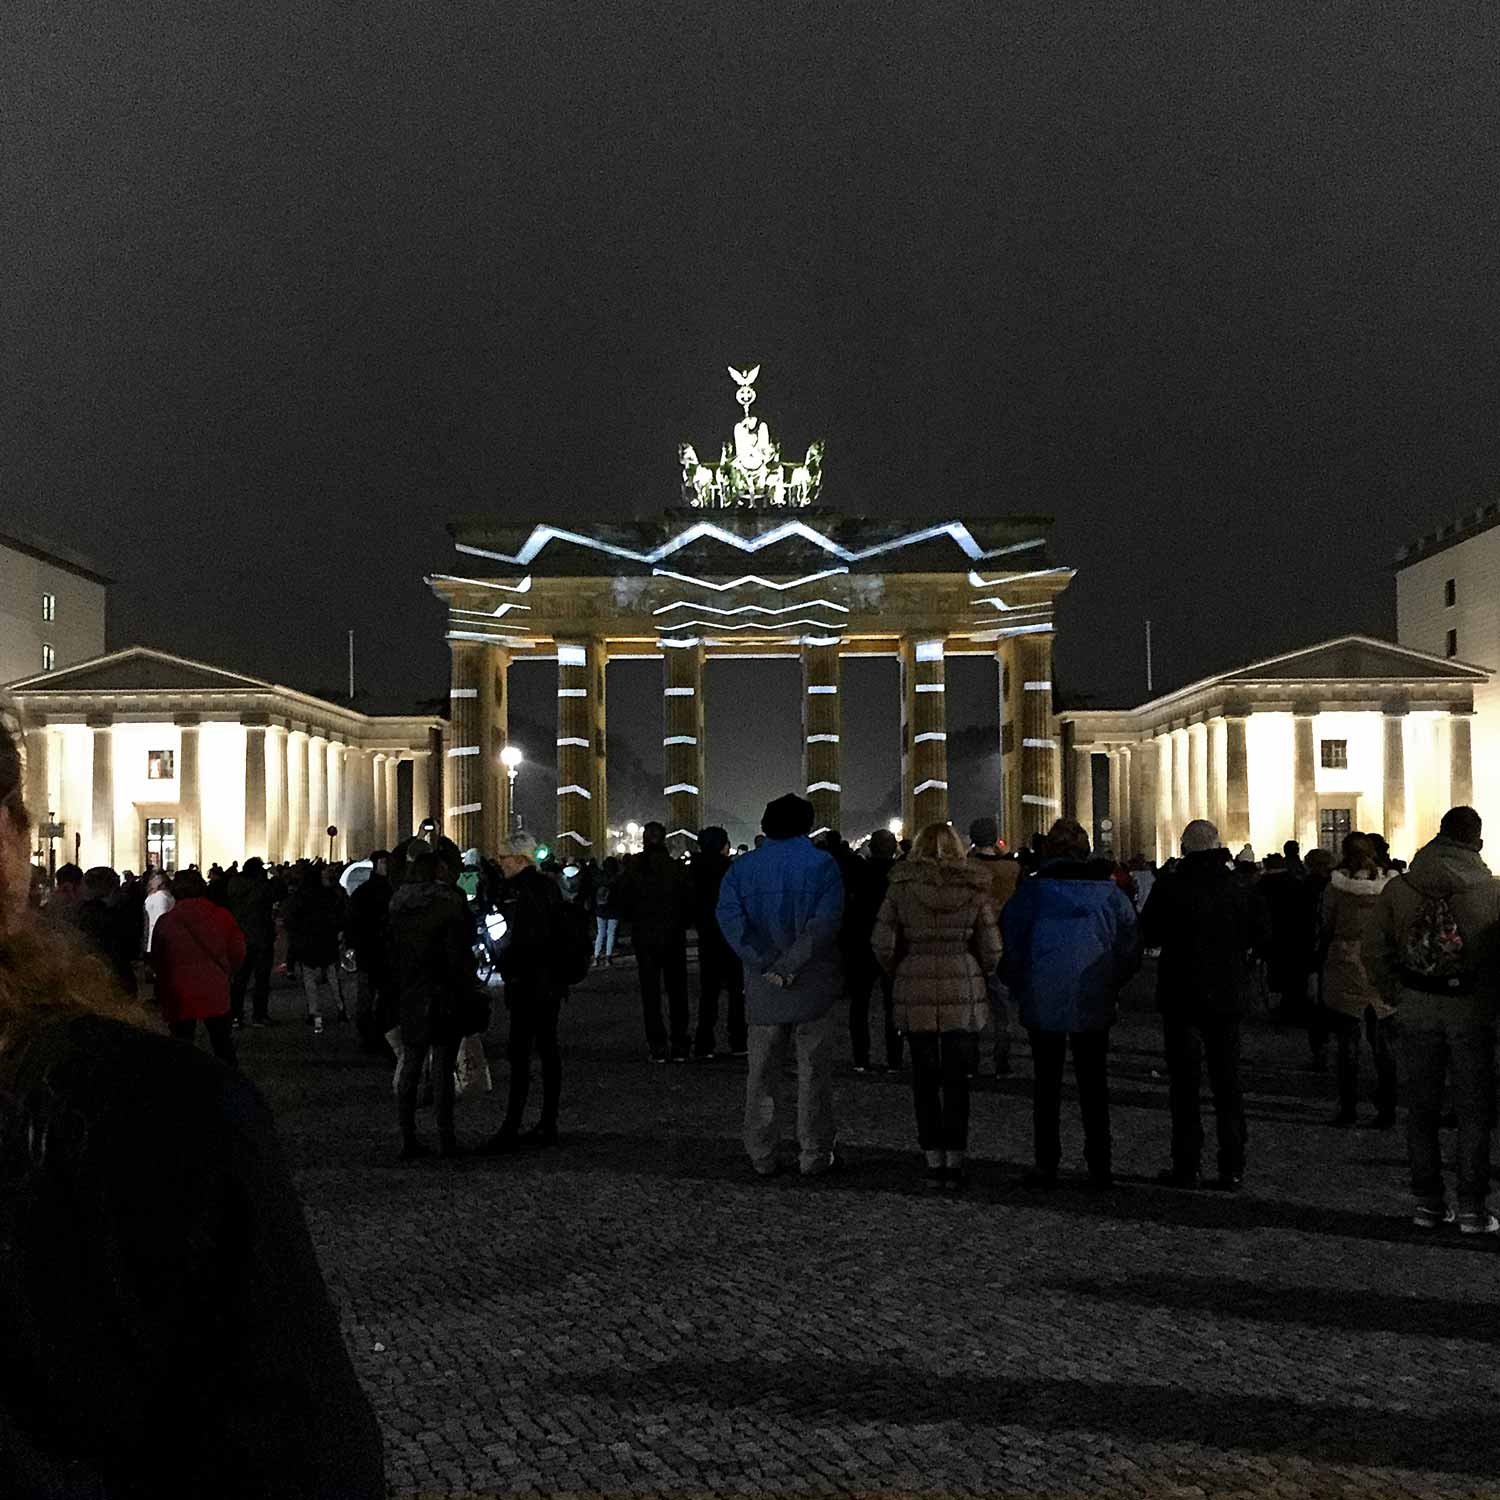 Festival of Lights 2015: ArtDeco am Brandenburger Tor